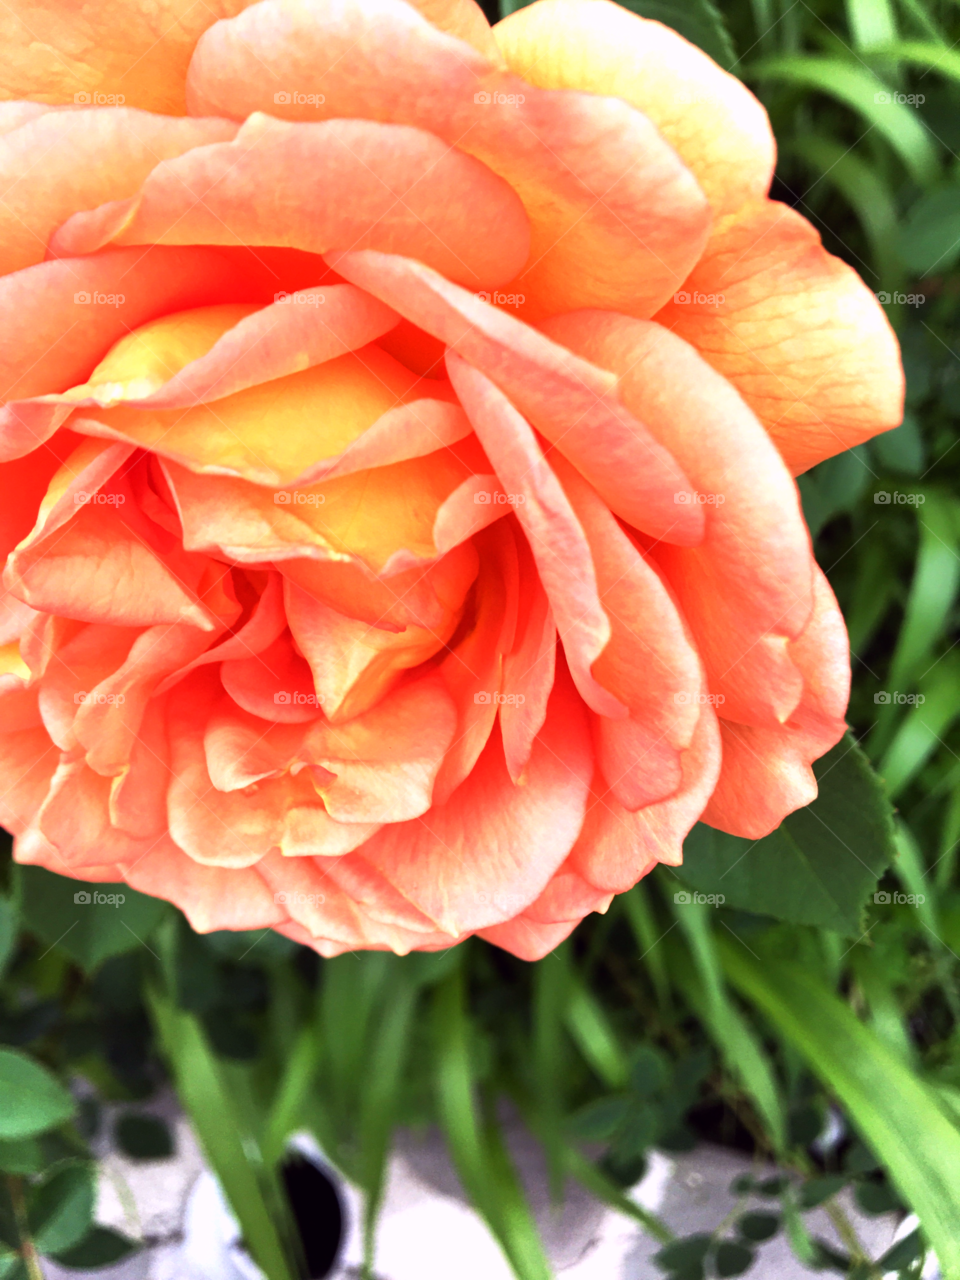 An up close shot of a peach colored rose